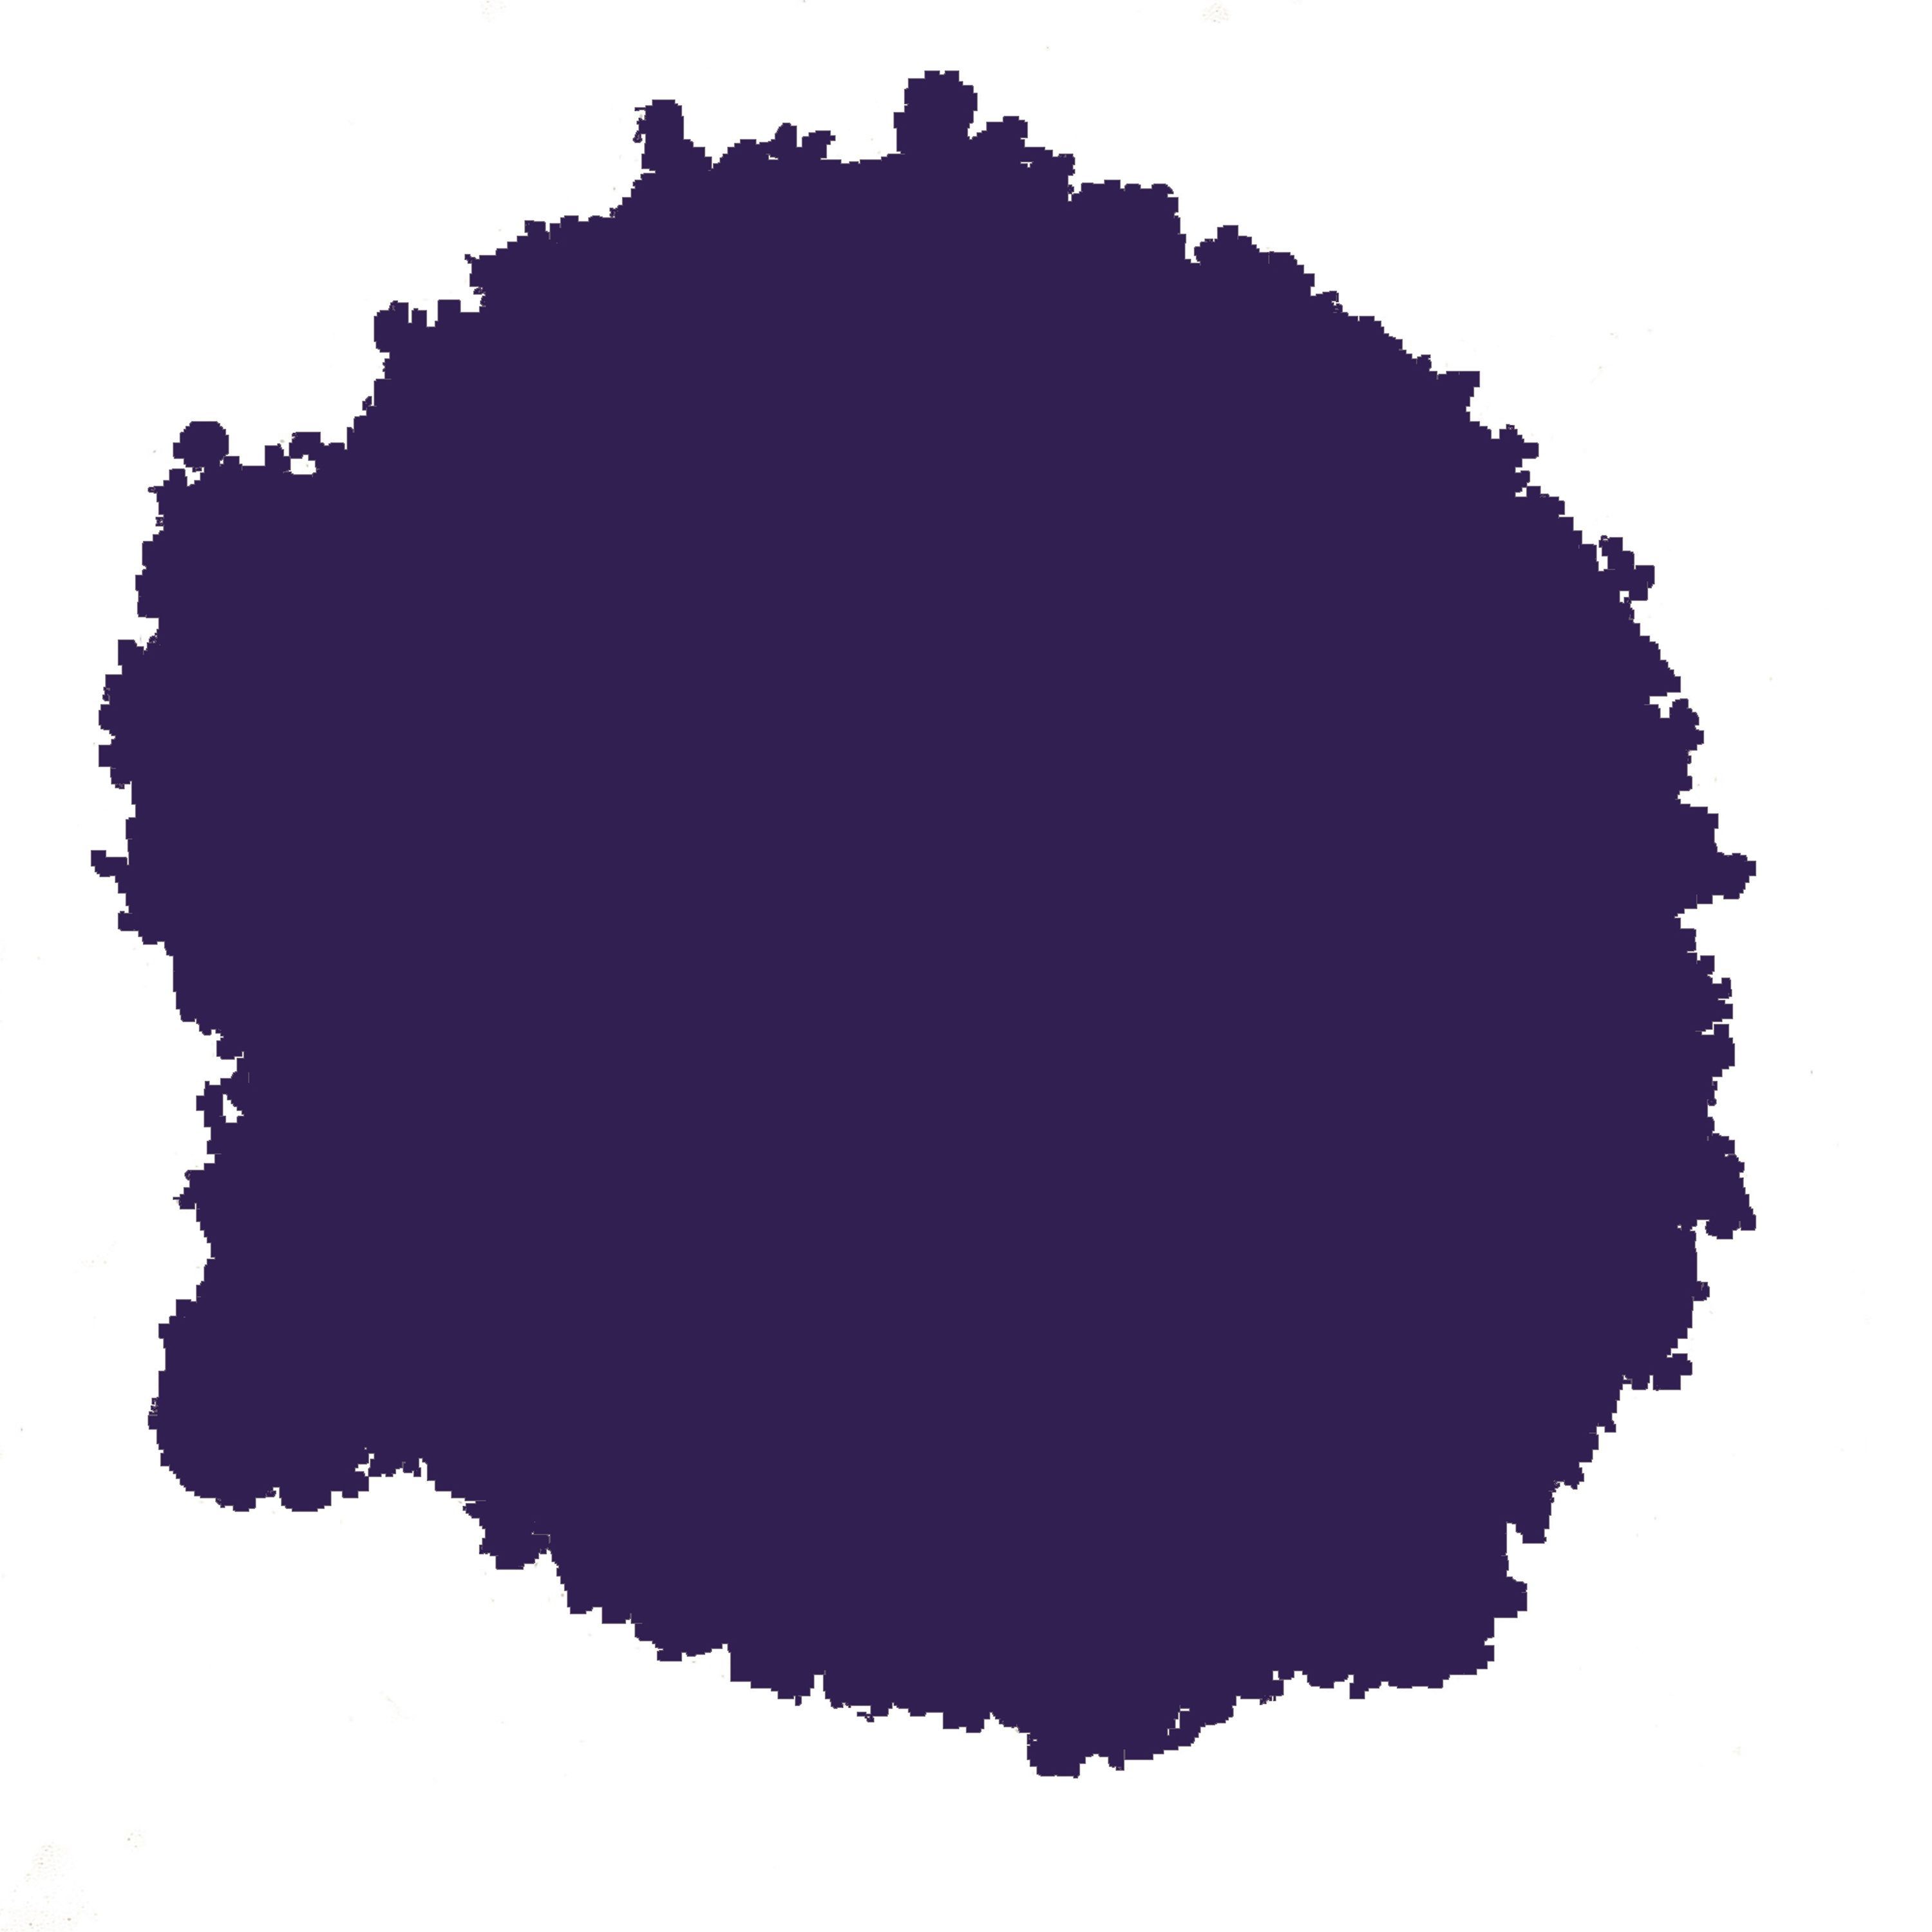 Rust-Oleum Painter's touch Purple Gloss Multi-surface Decorative spray paint, 400ml